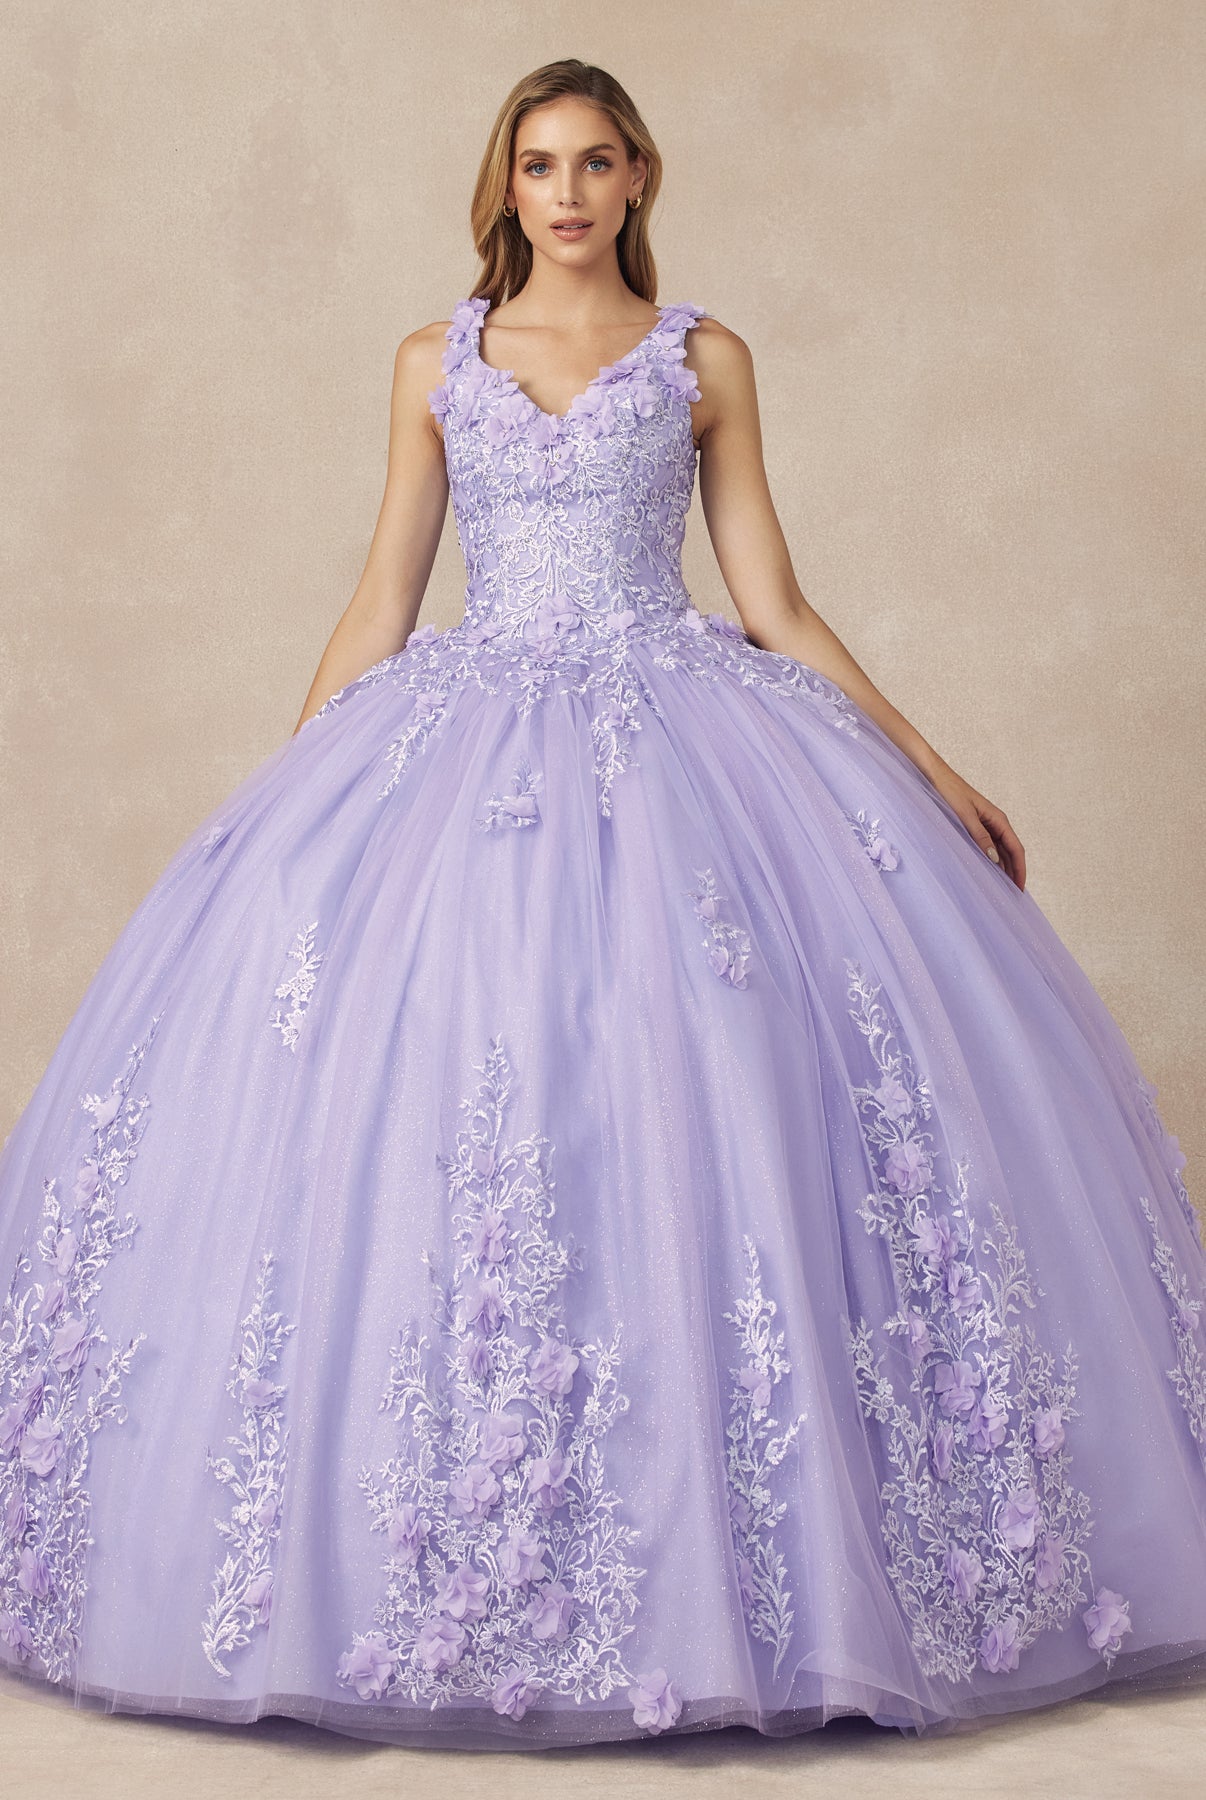 Floral ball gown dress-smcdress